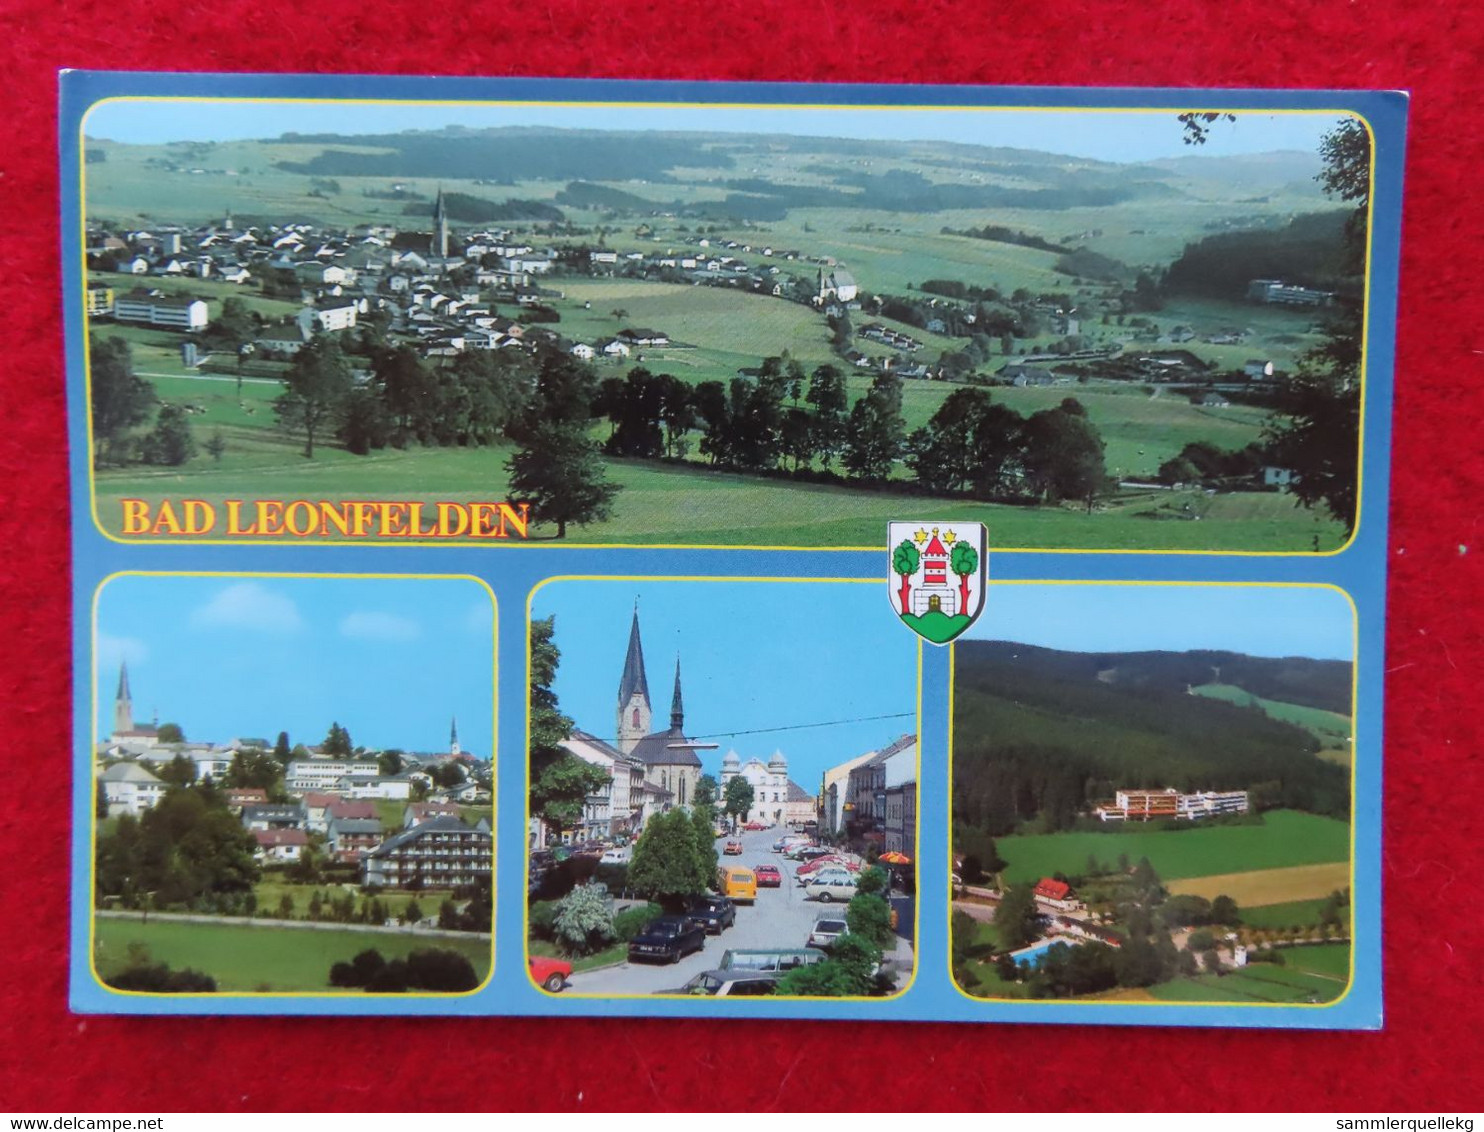 AK: Bad Leonfelden, Gelaufen 24. 5. 1994 (Nr.3304) - Bad Leonfelden